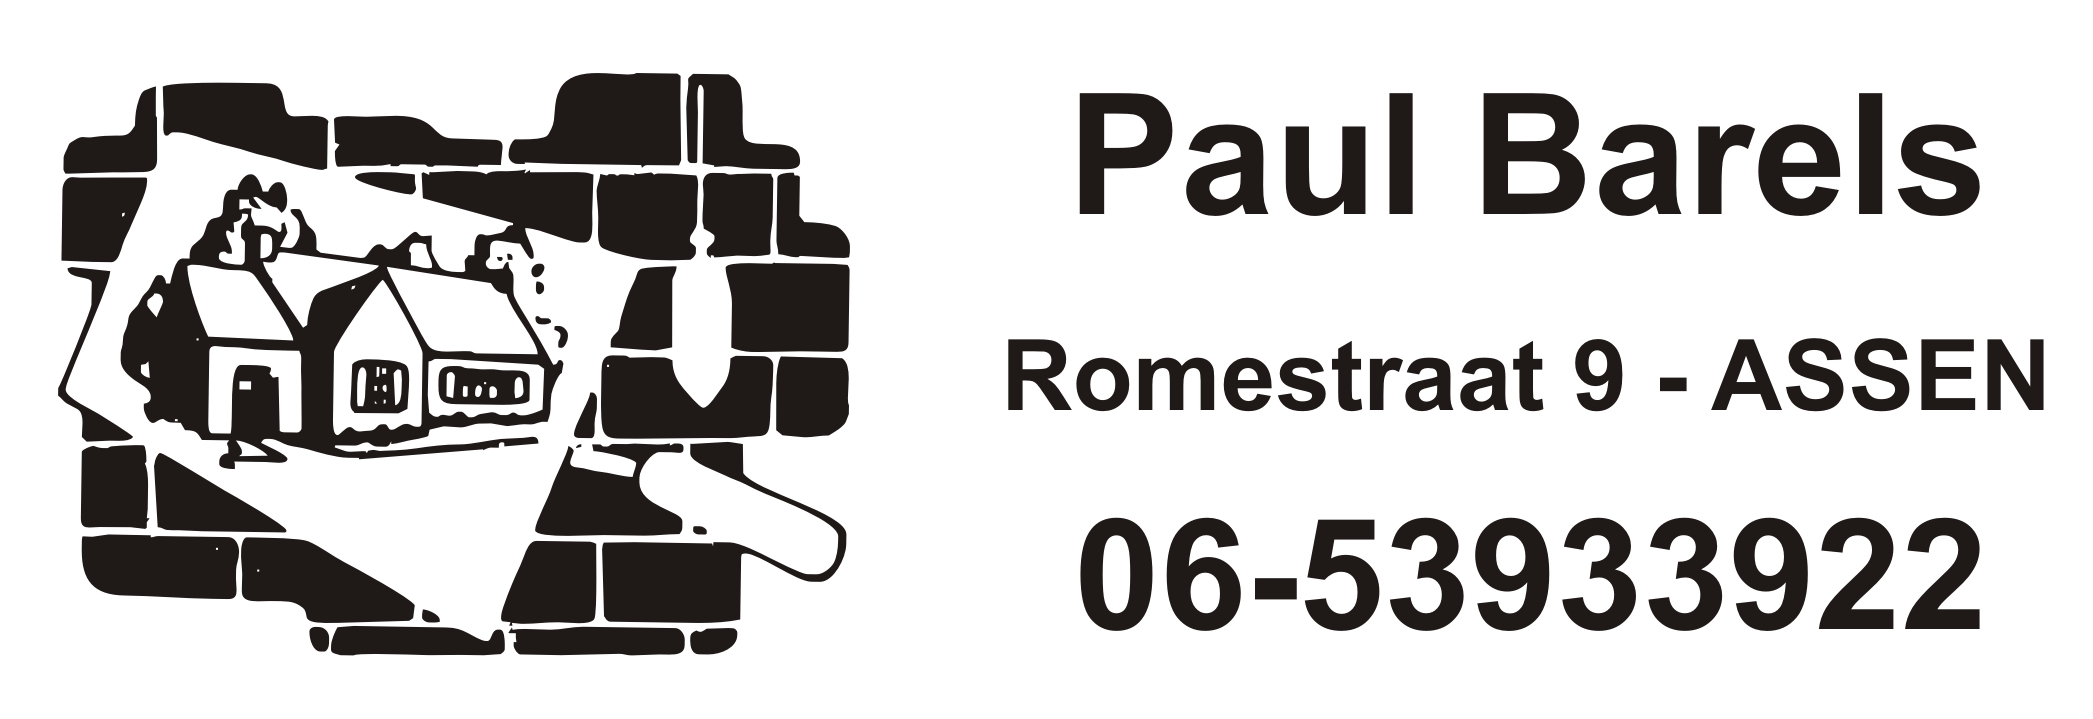 Paul Barels, Romestraat 9 Assen, 06-53933922